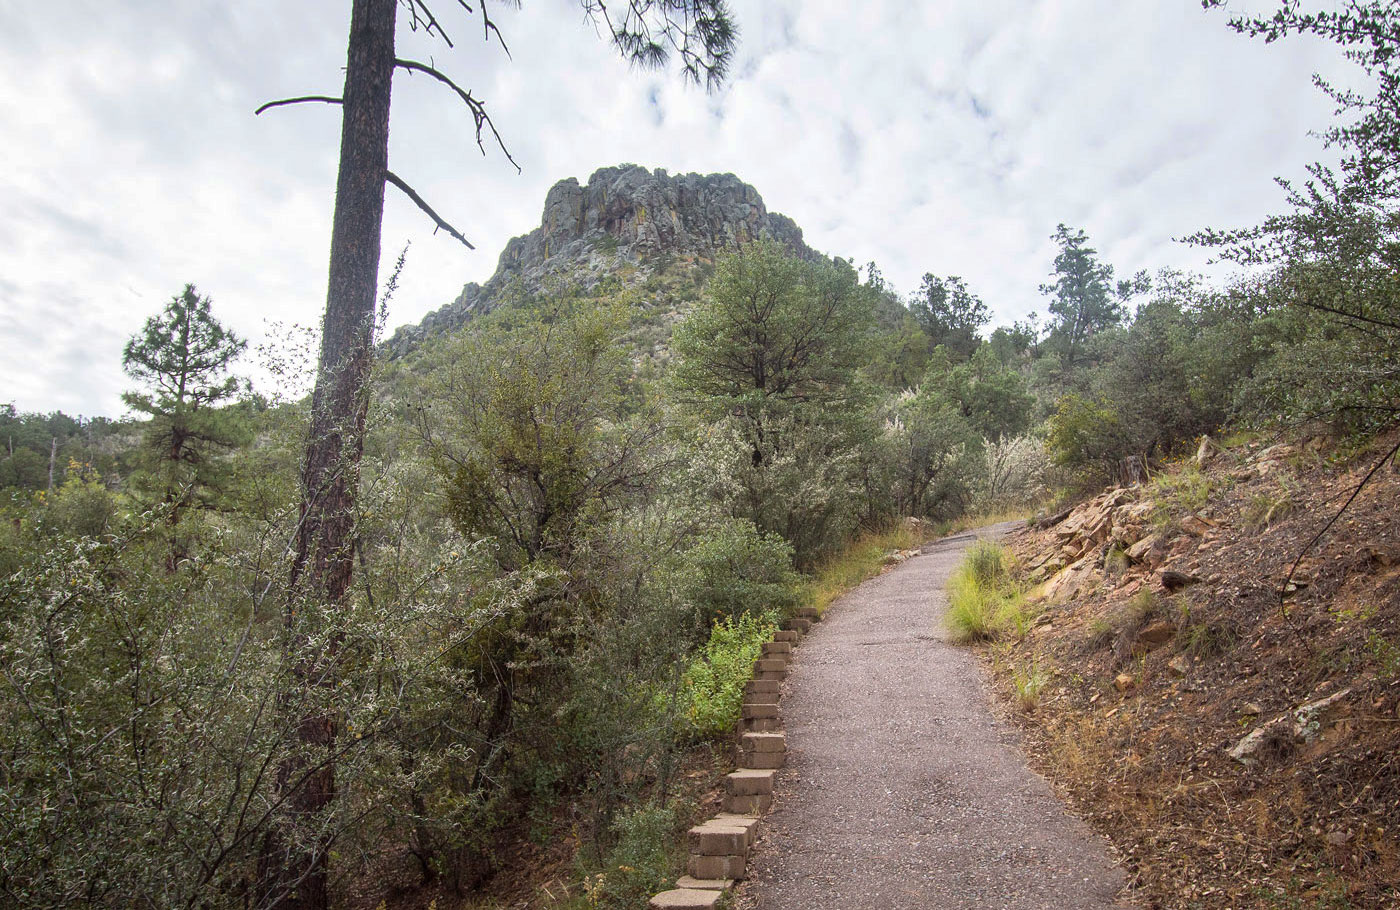 Hike Thumb Butte in Prescott National Forest, Arizona - Stav is Lost